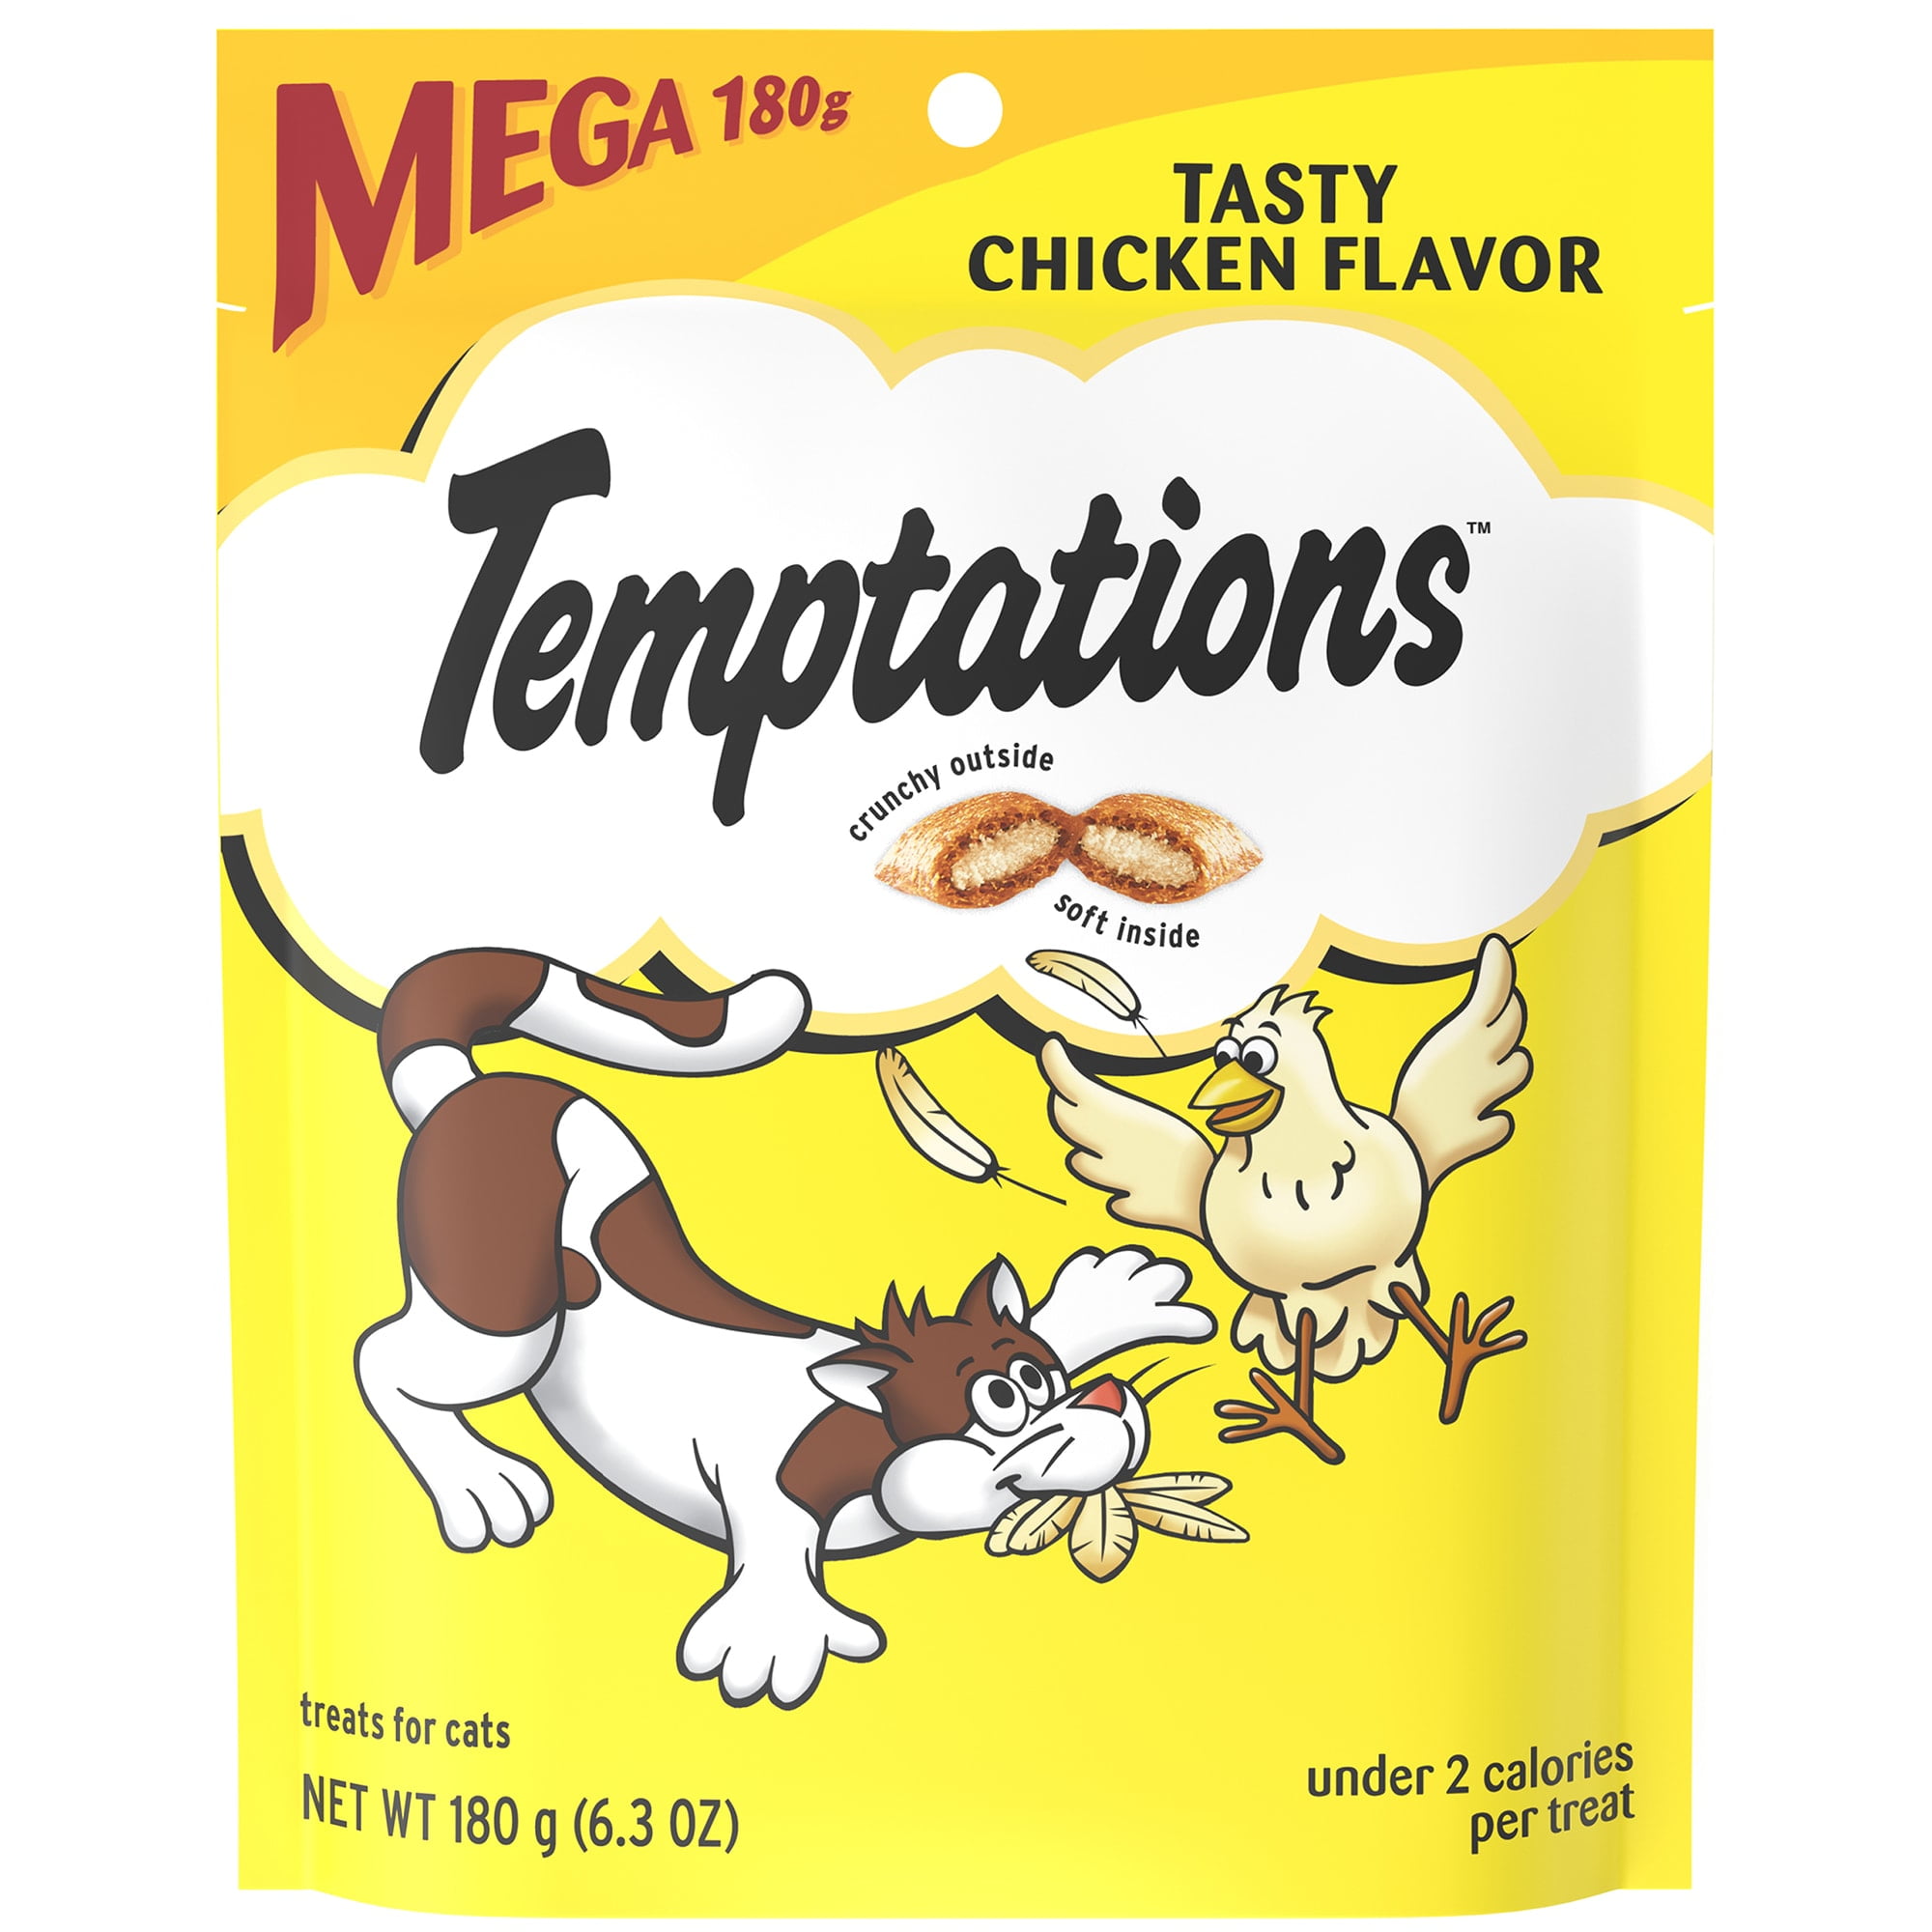 Tasty Chicken Flavor Dry Cat Food | lupon.gov.ph